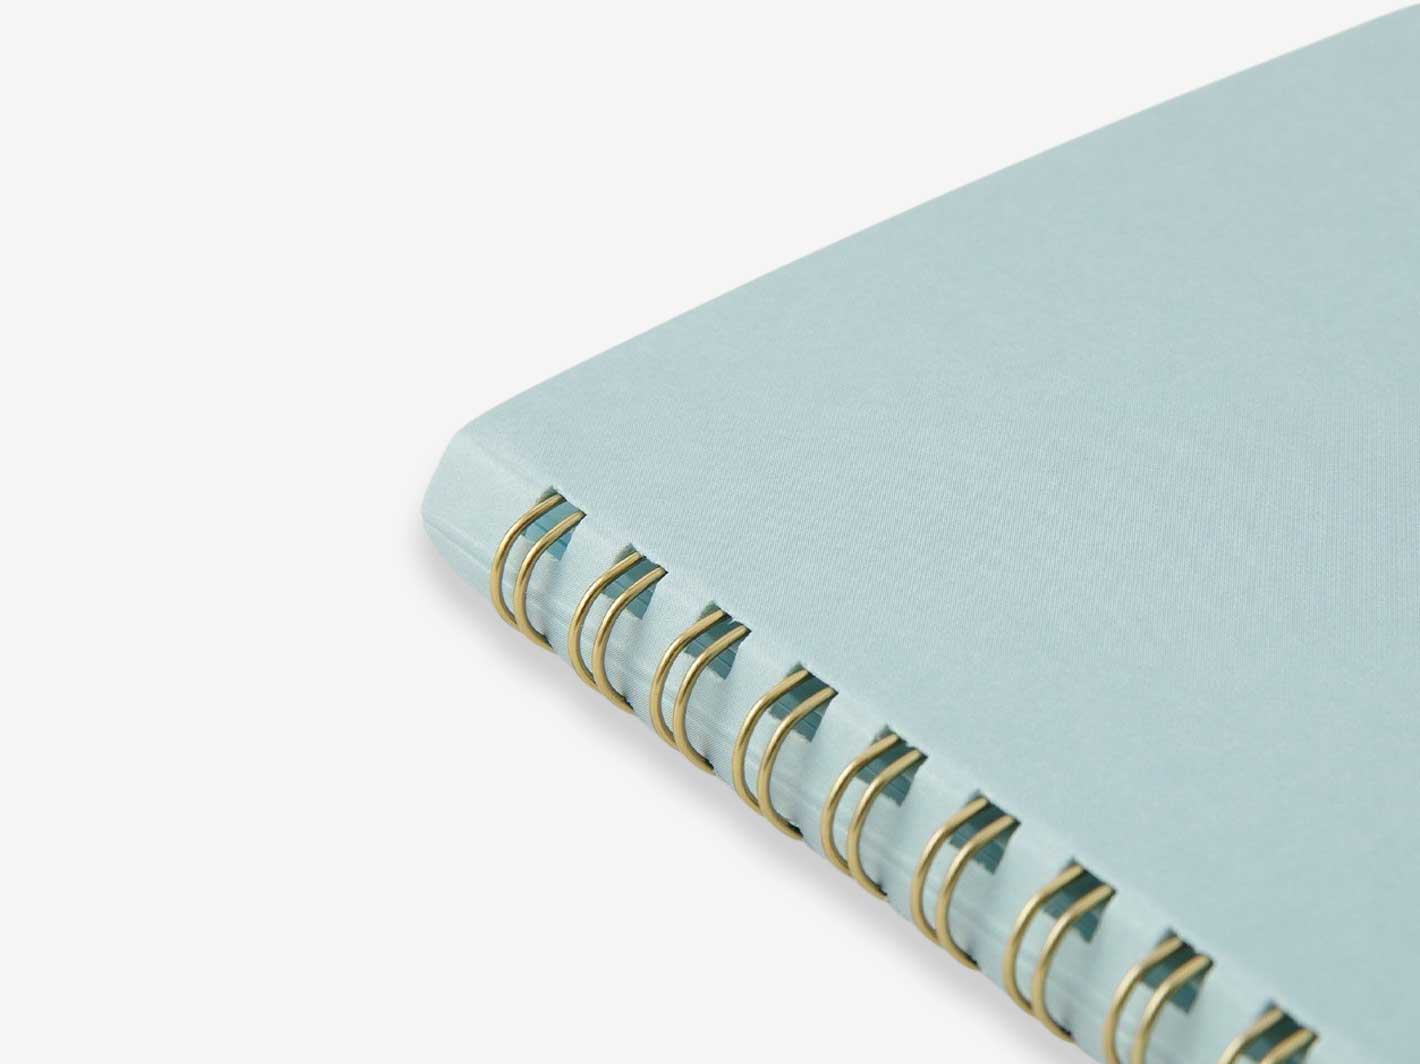 Color Dot Grid Ring Notebook Blue